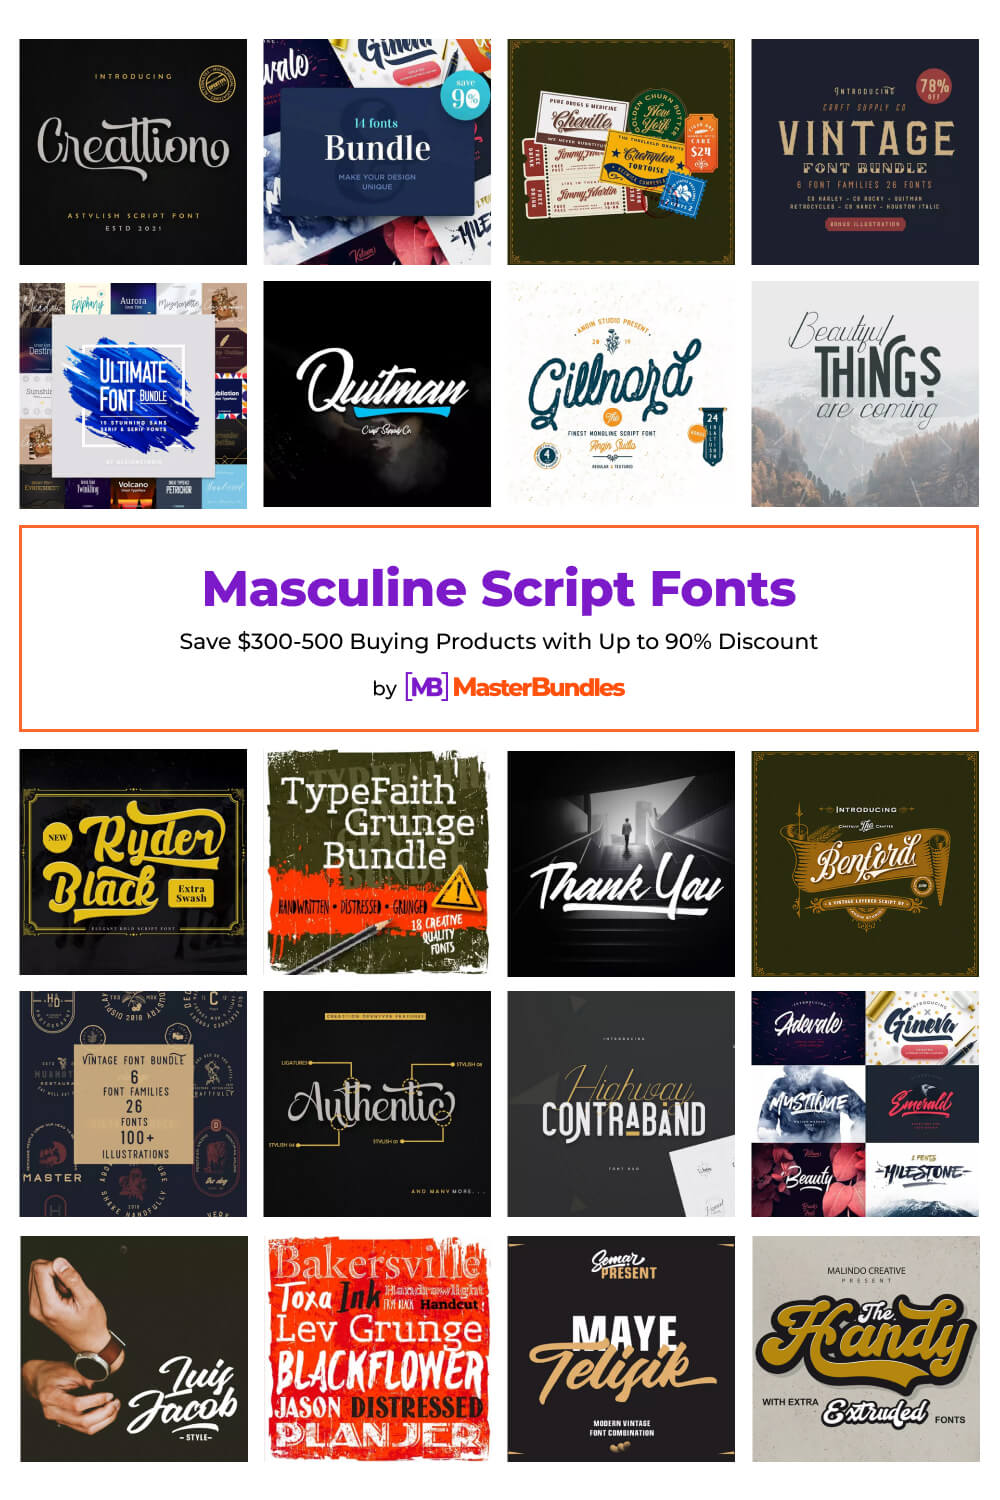 masculine script fonts pinterest image.